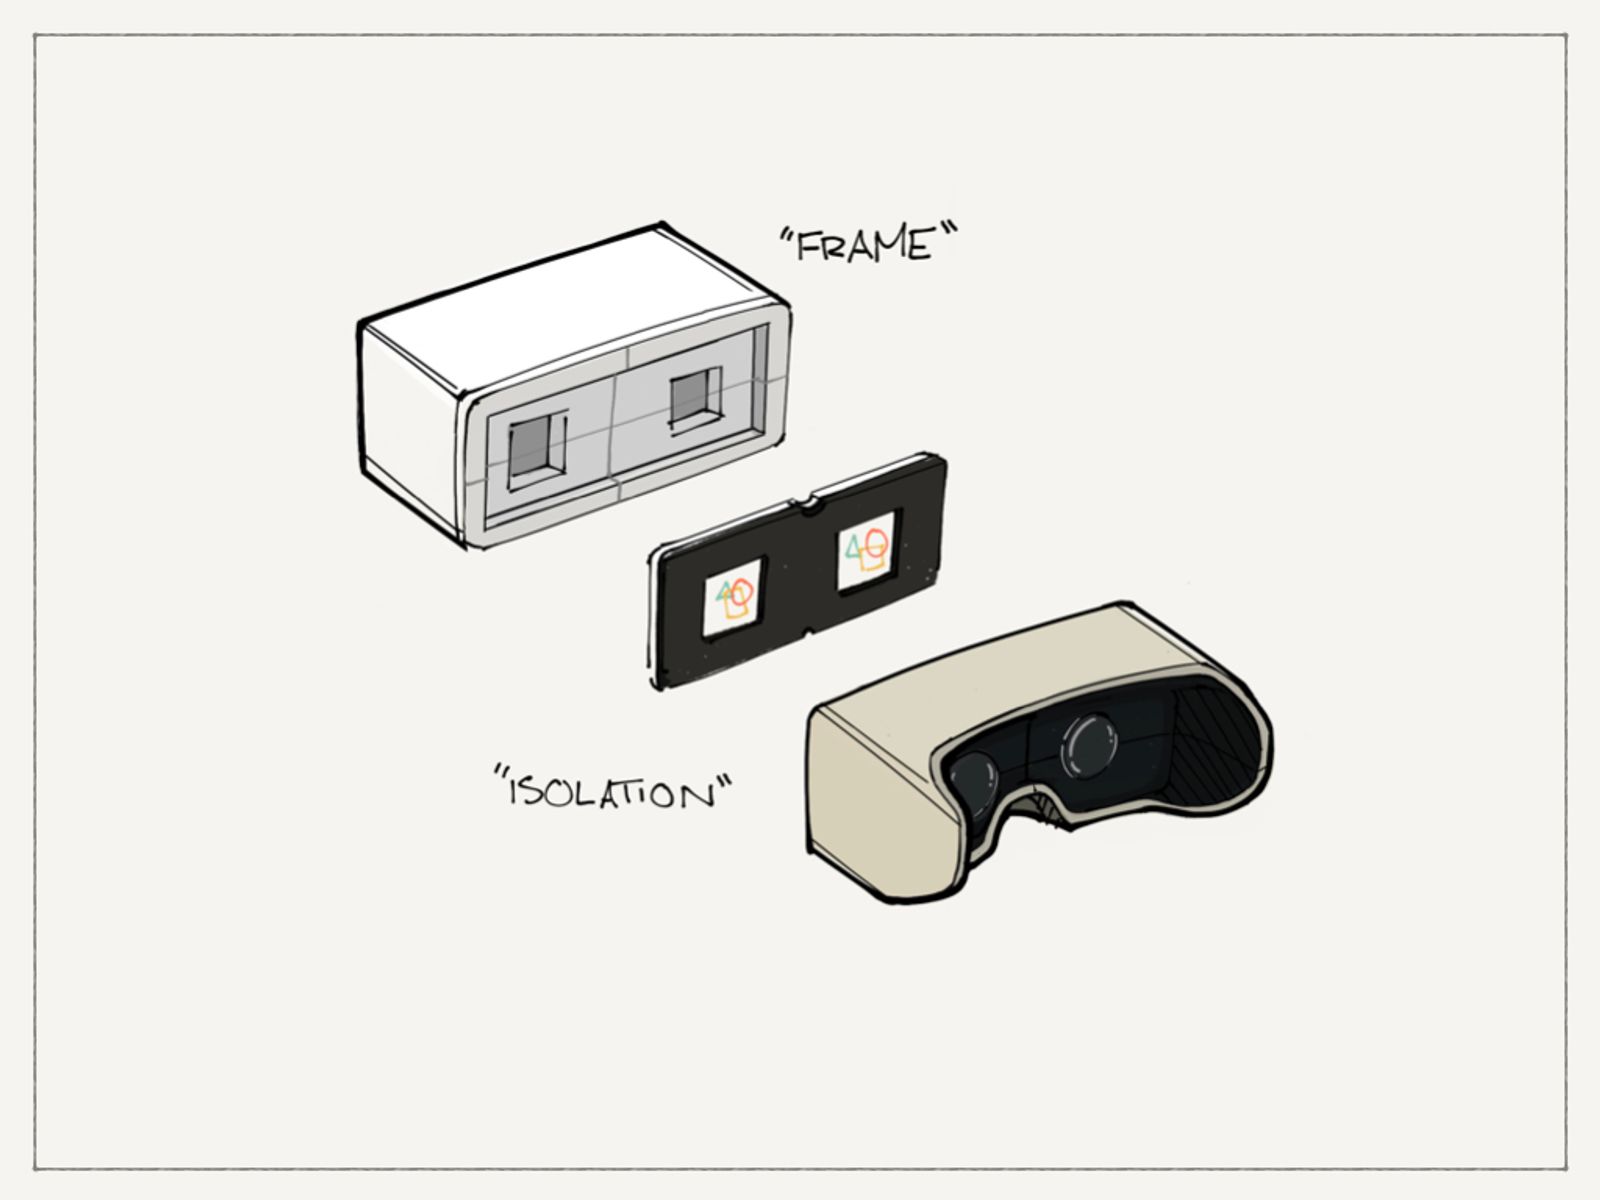 © RACHEL TREIDE - Design sketch illustrating Frame/Lightbox and Body design, with the stereo card encased between them